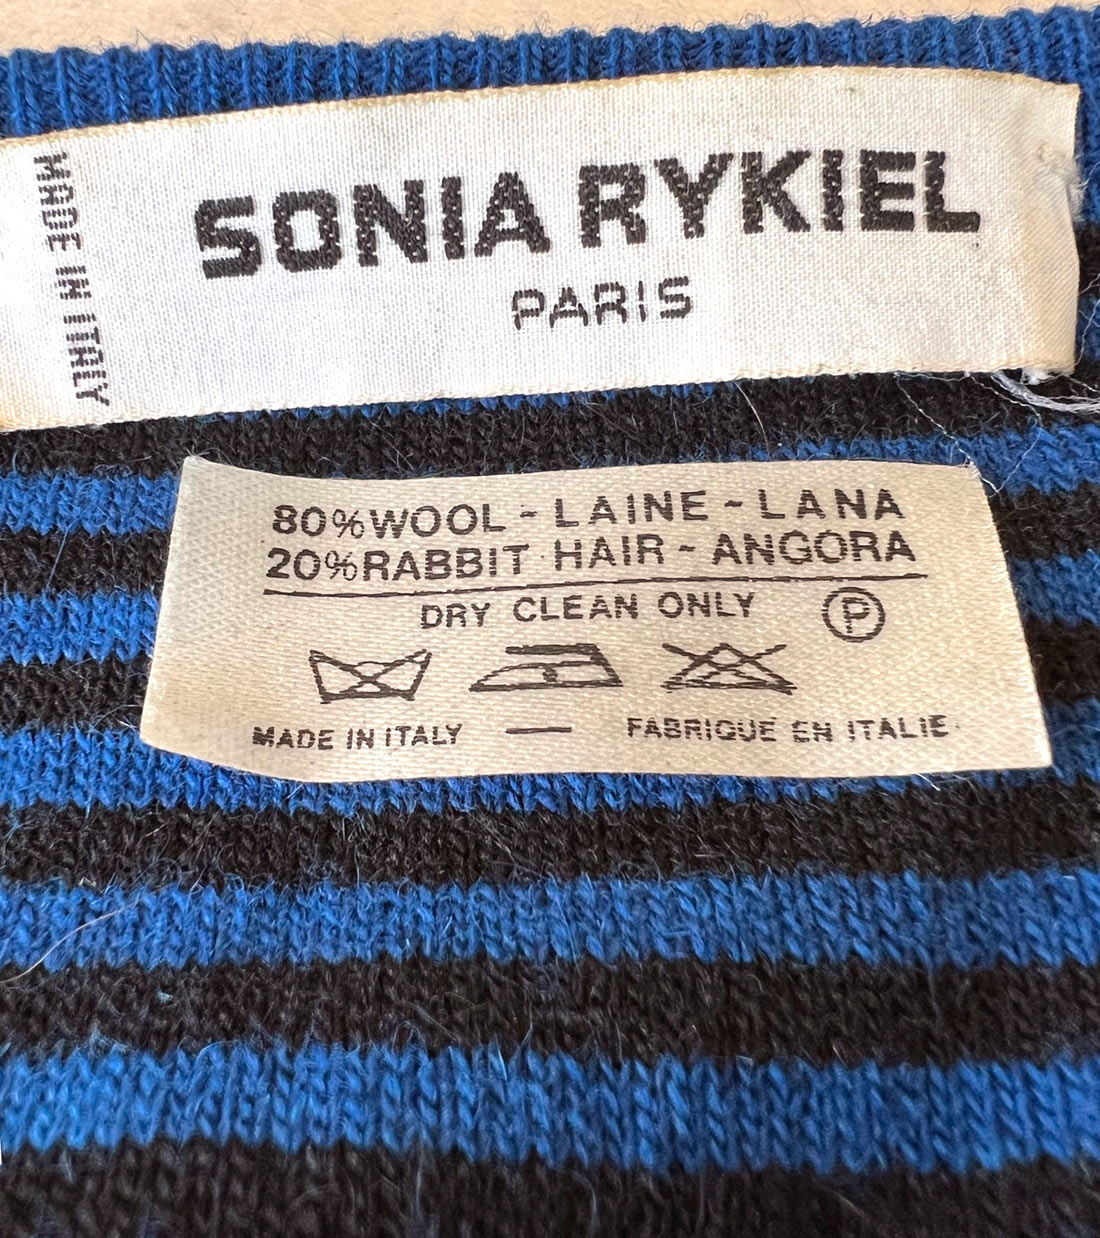 80s Striped Sweater Vintage Cropped Women's Pullover Medium Sonia Rykiel Italian VFG